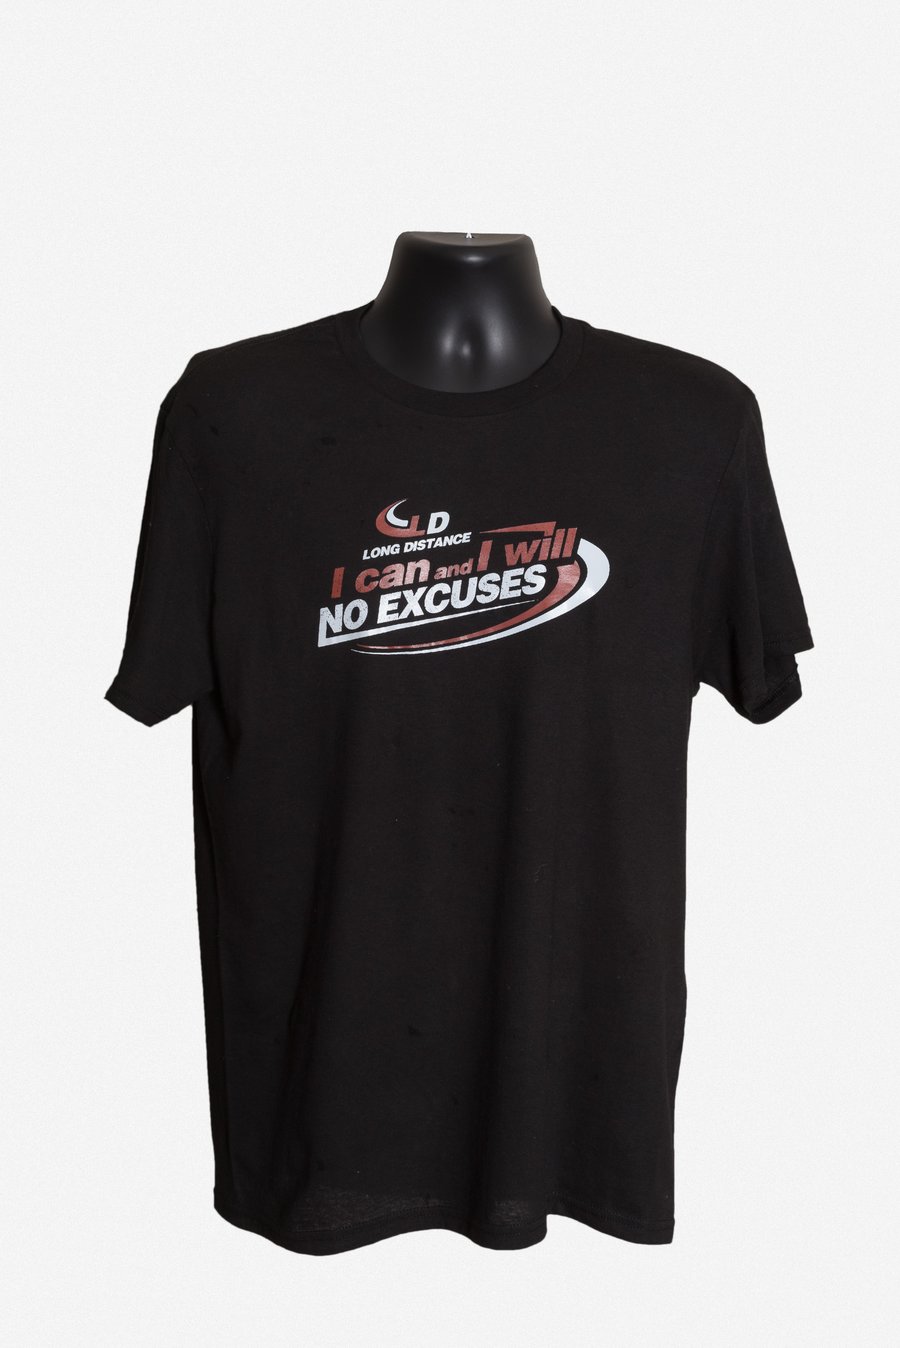 Image of Black "No excuses" T-shirt